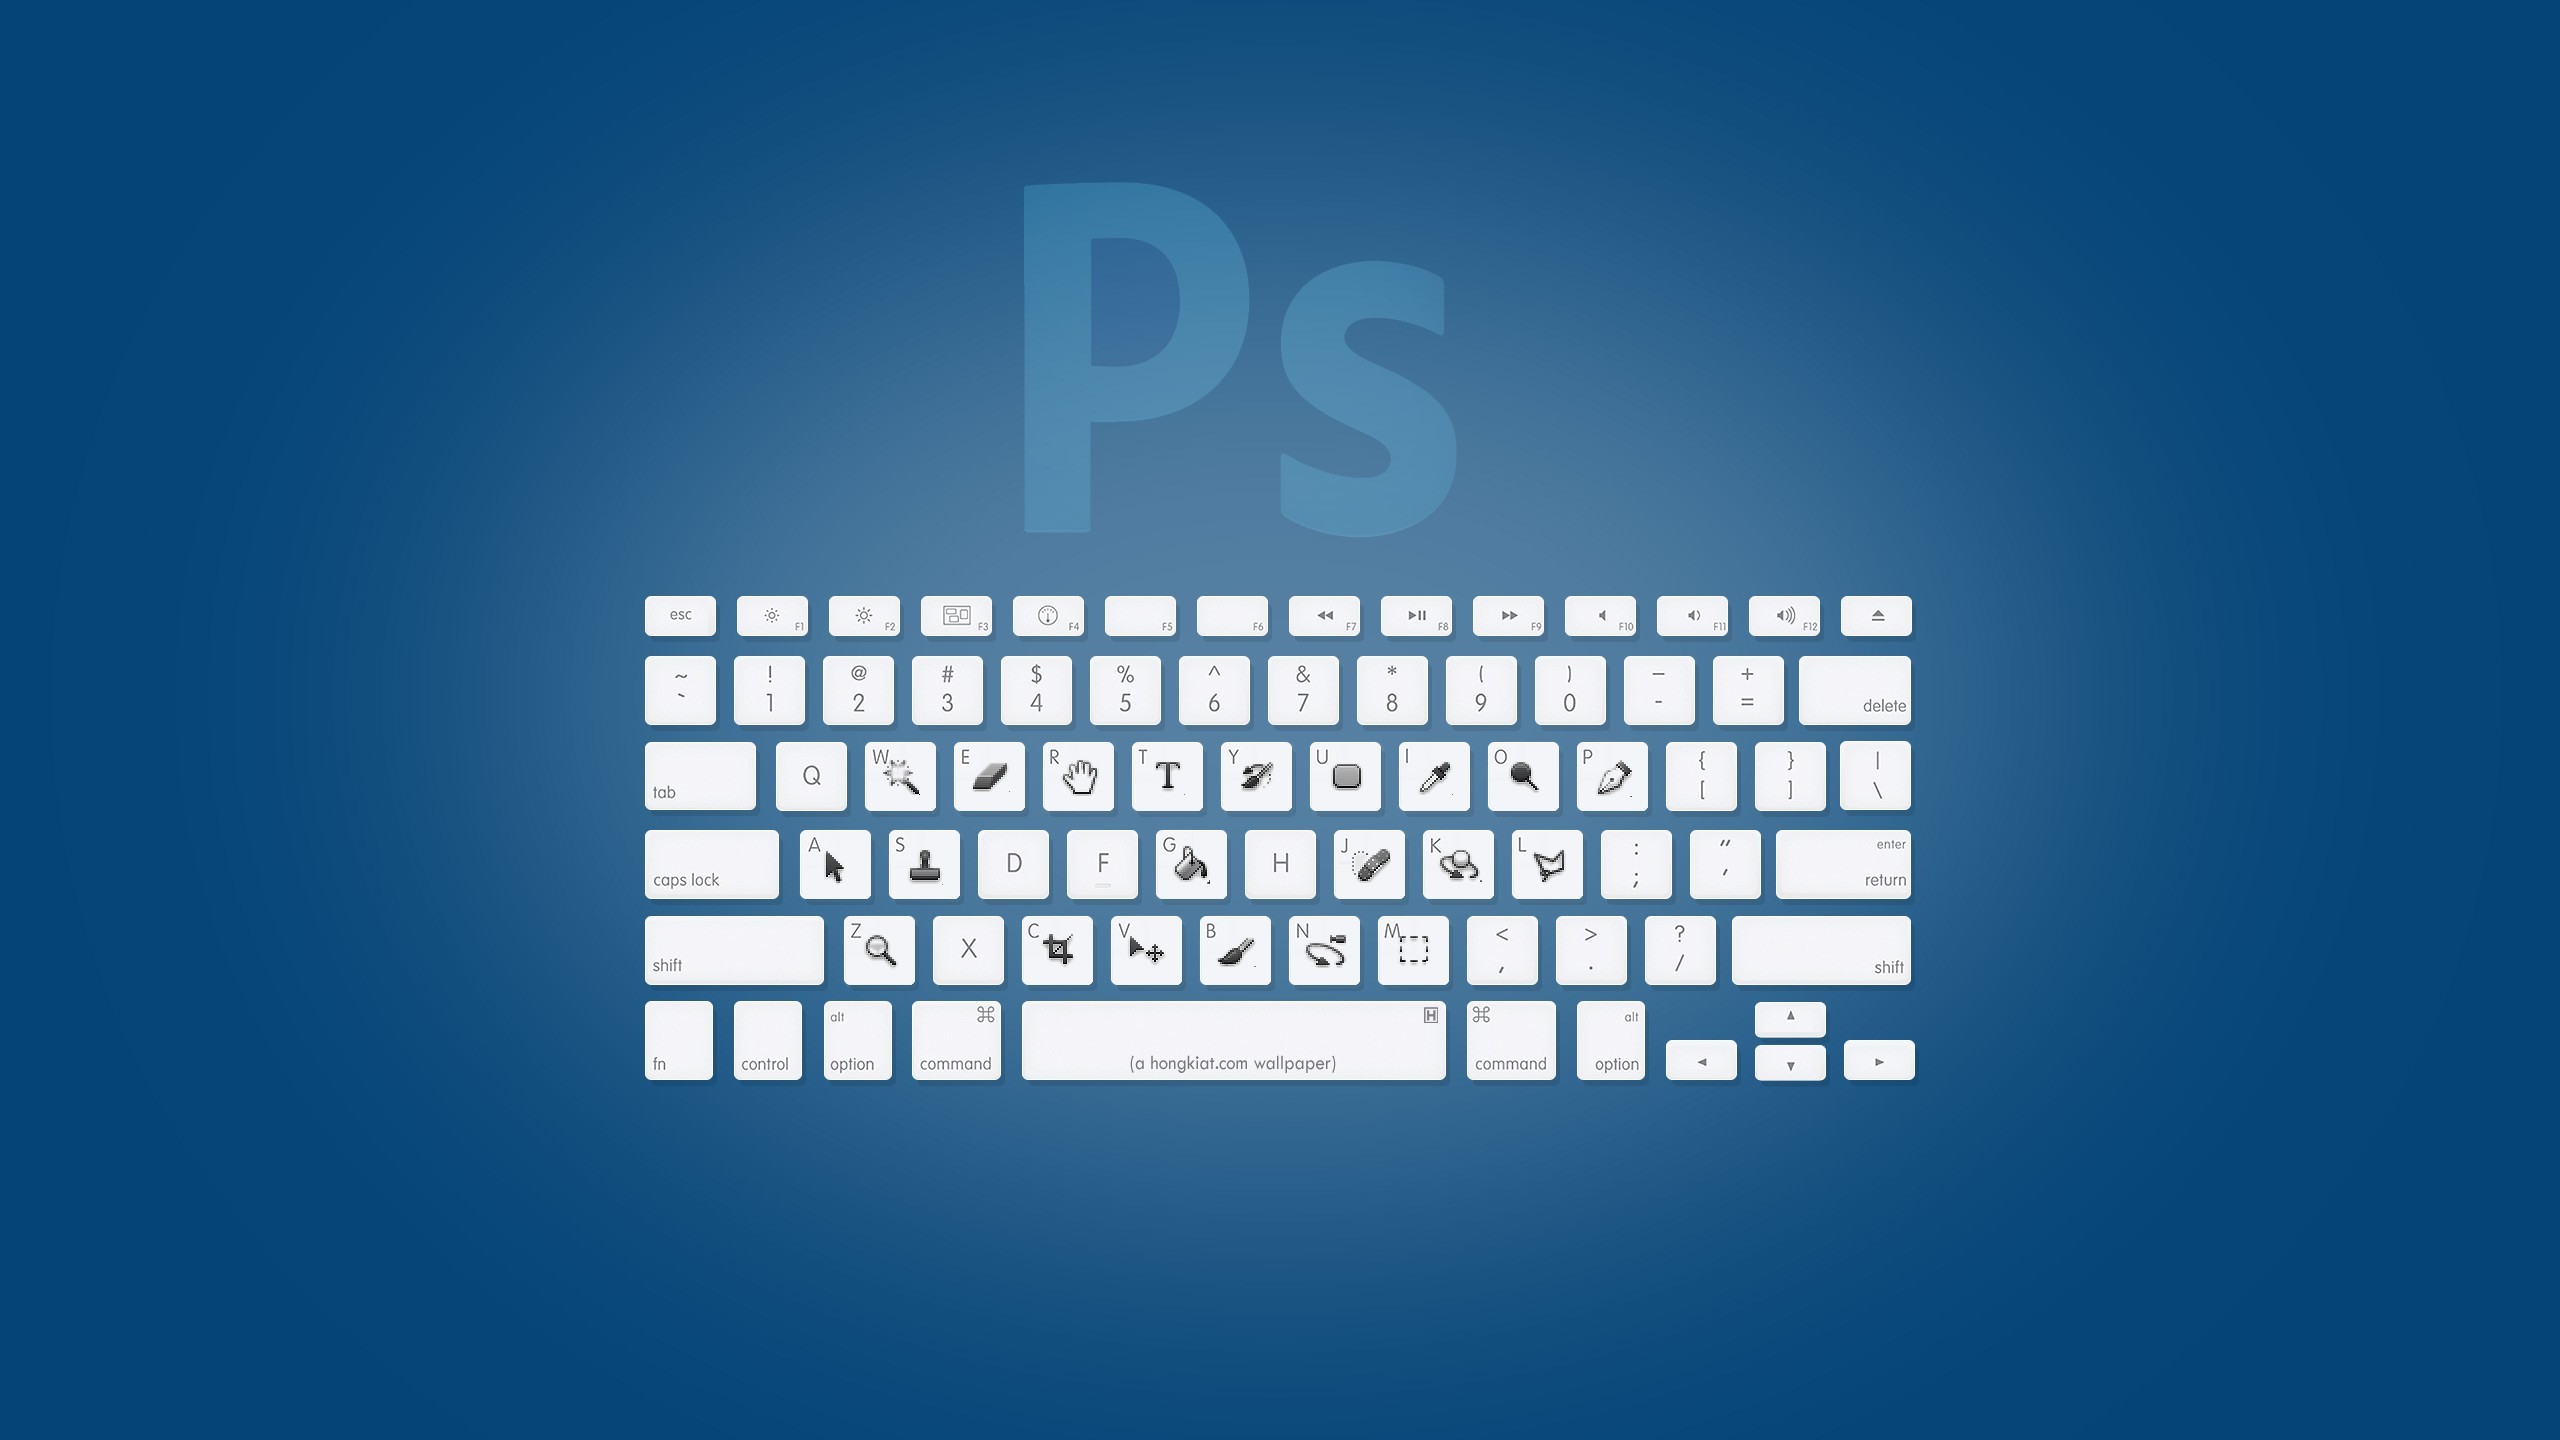 Adobe Photoshop Blue Keys Keyboards Blue Background 2560x1440